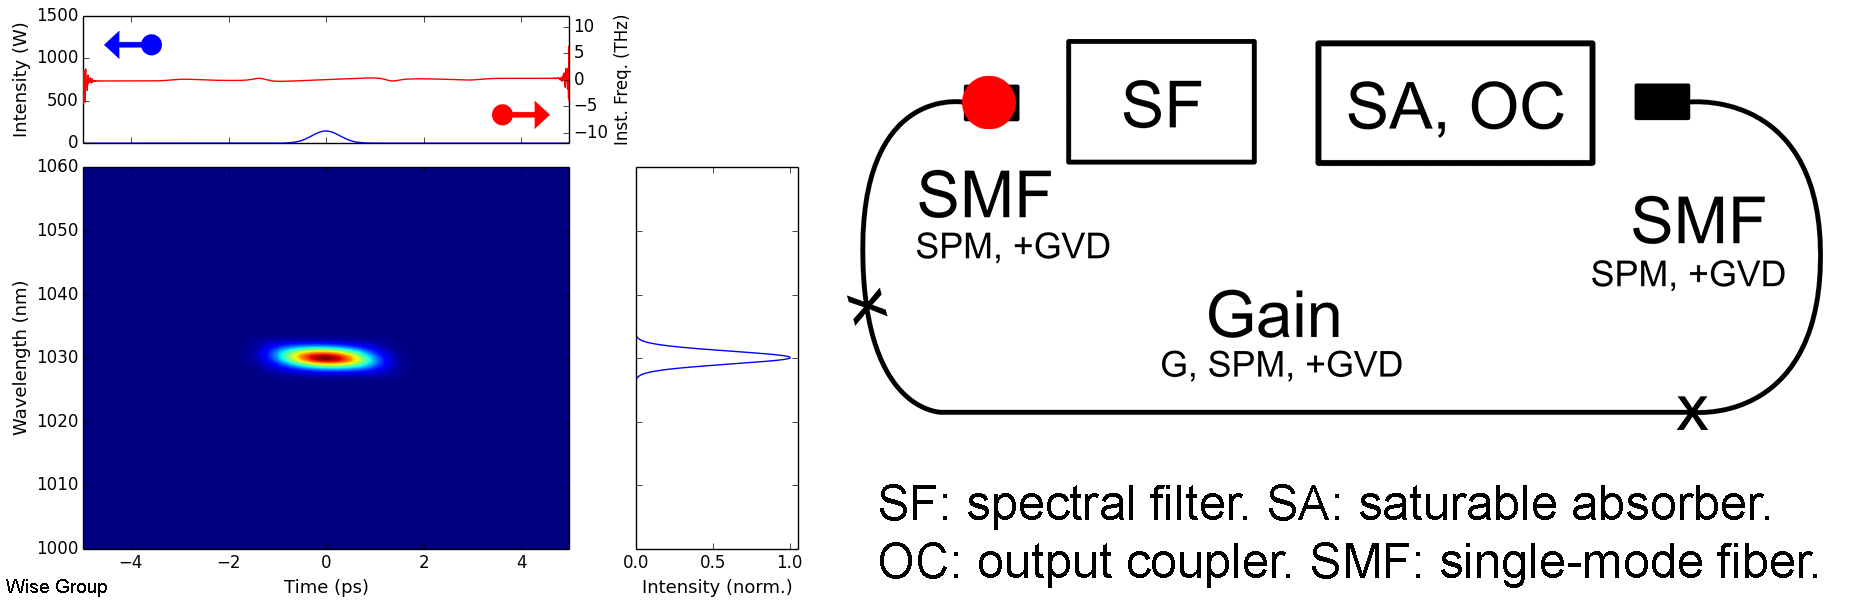 Animation of amplifier similariton evolution